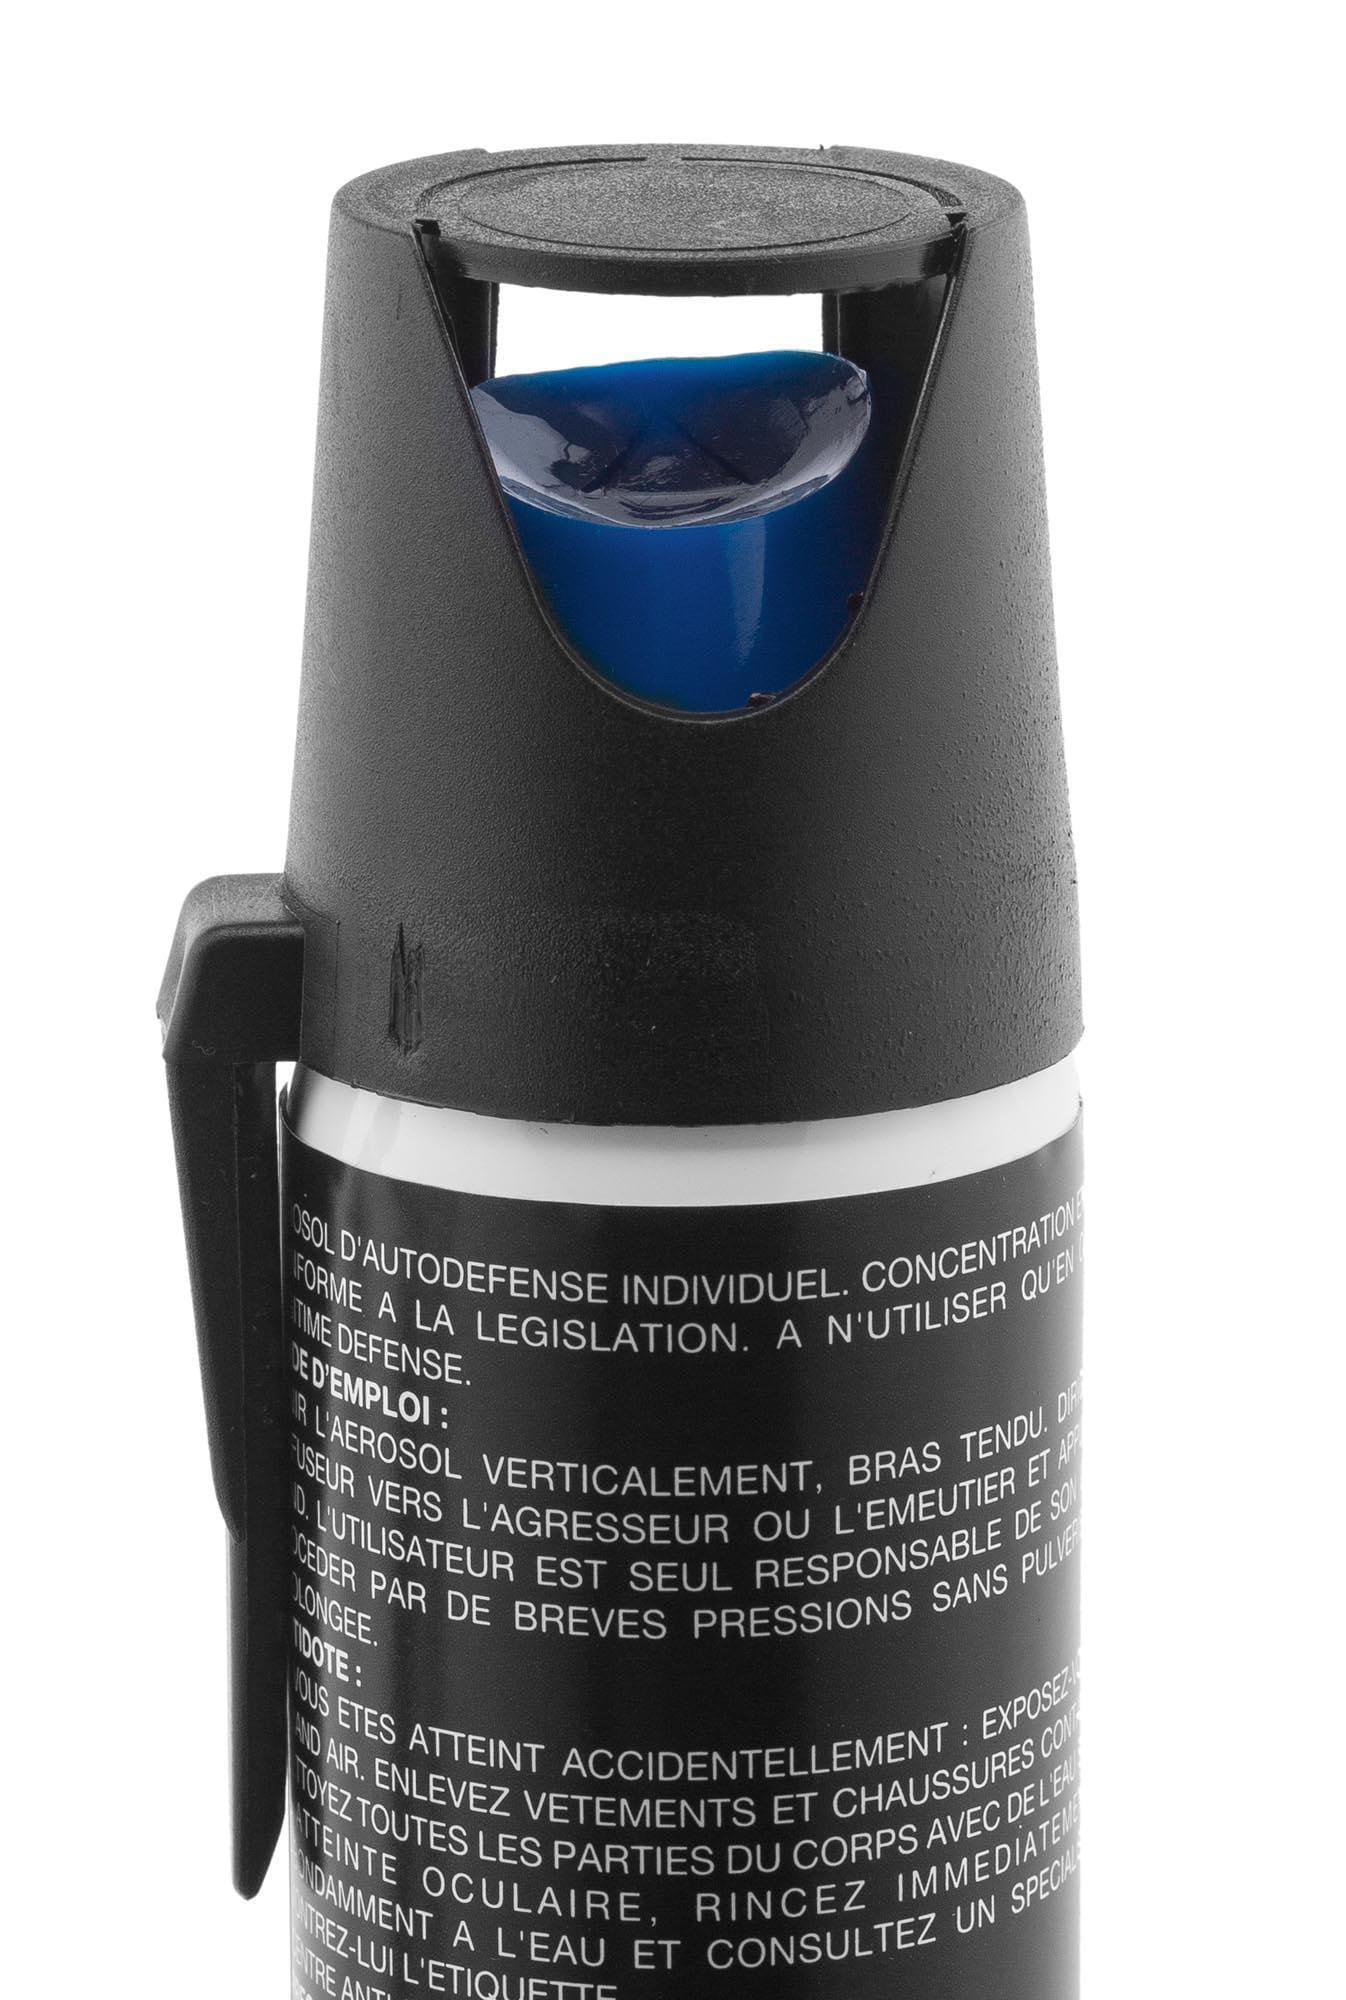 50 ml - Spray anti agression CS 80 gaz défense